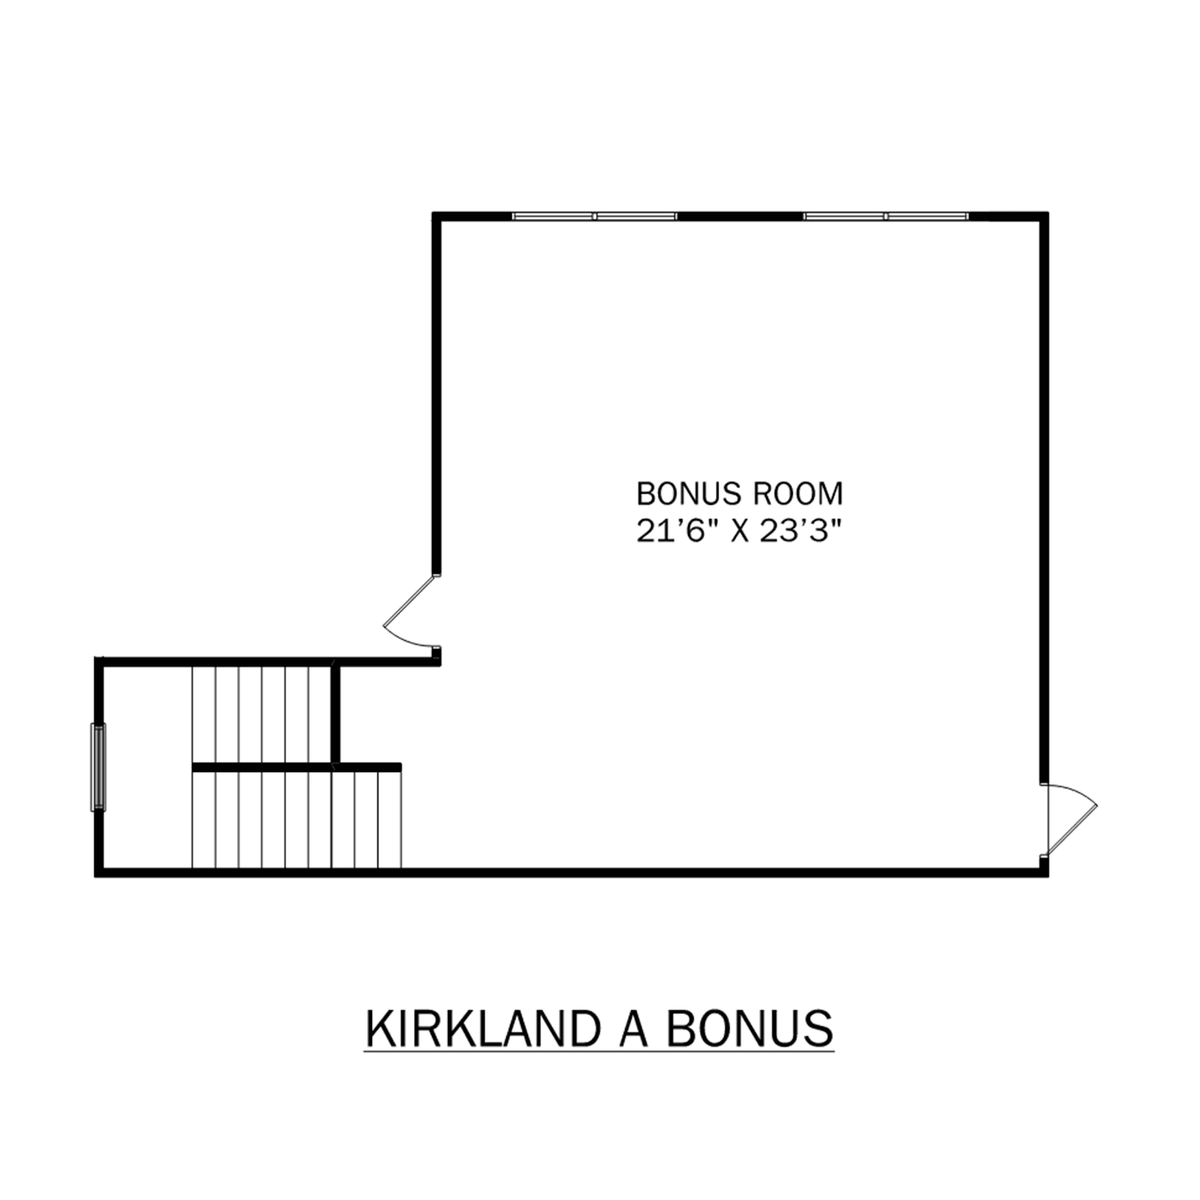 2 - The Kirkland with Bonus buildable floor plan layout in Davidson Homes' Cain Park community.